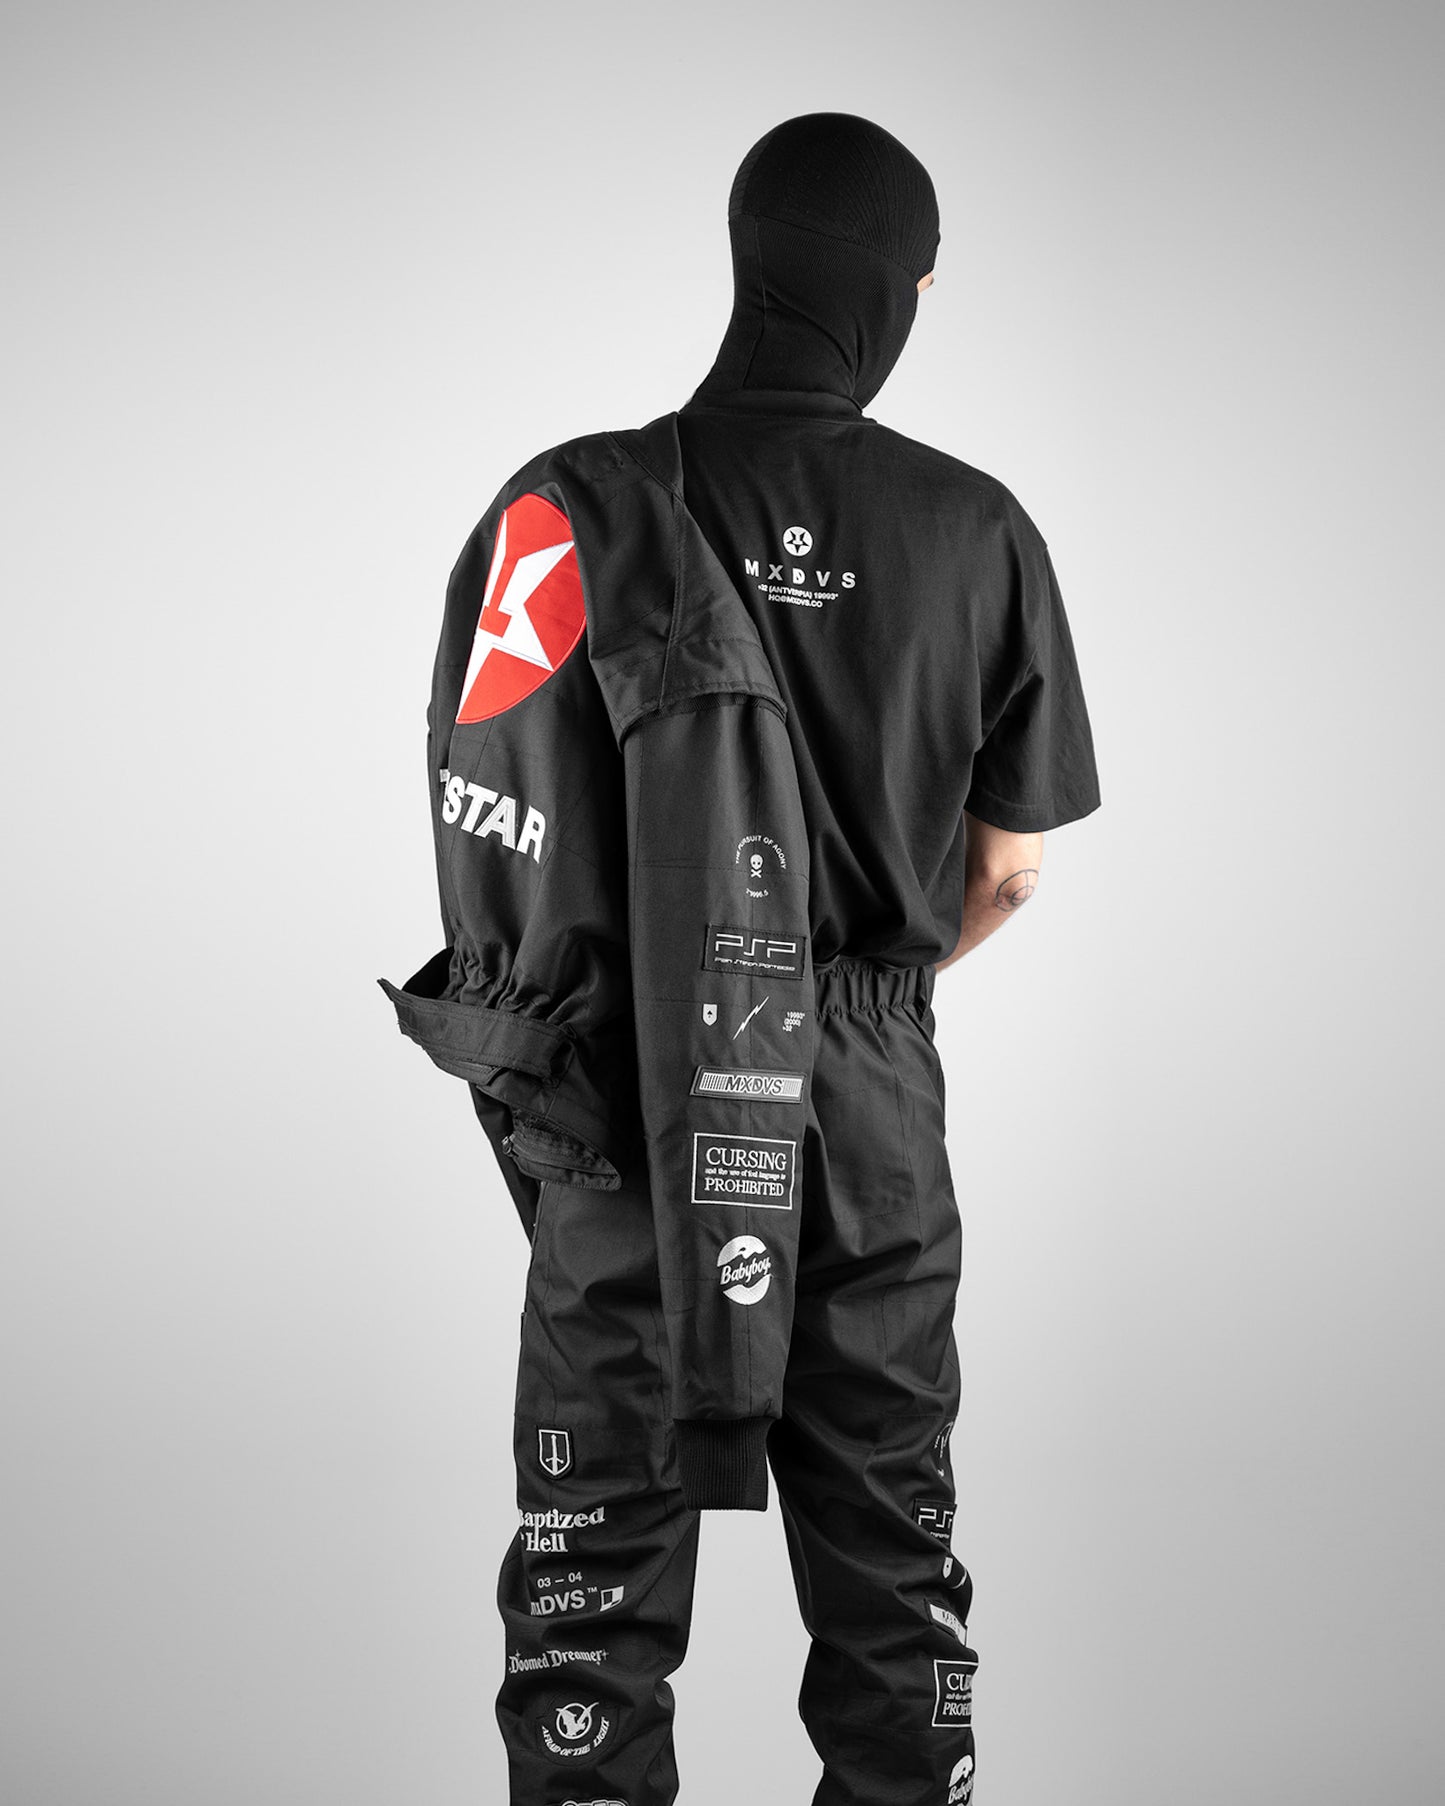 Trashstar Racing Suit